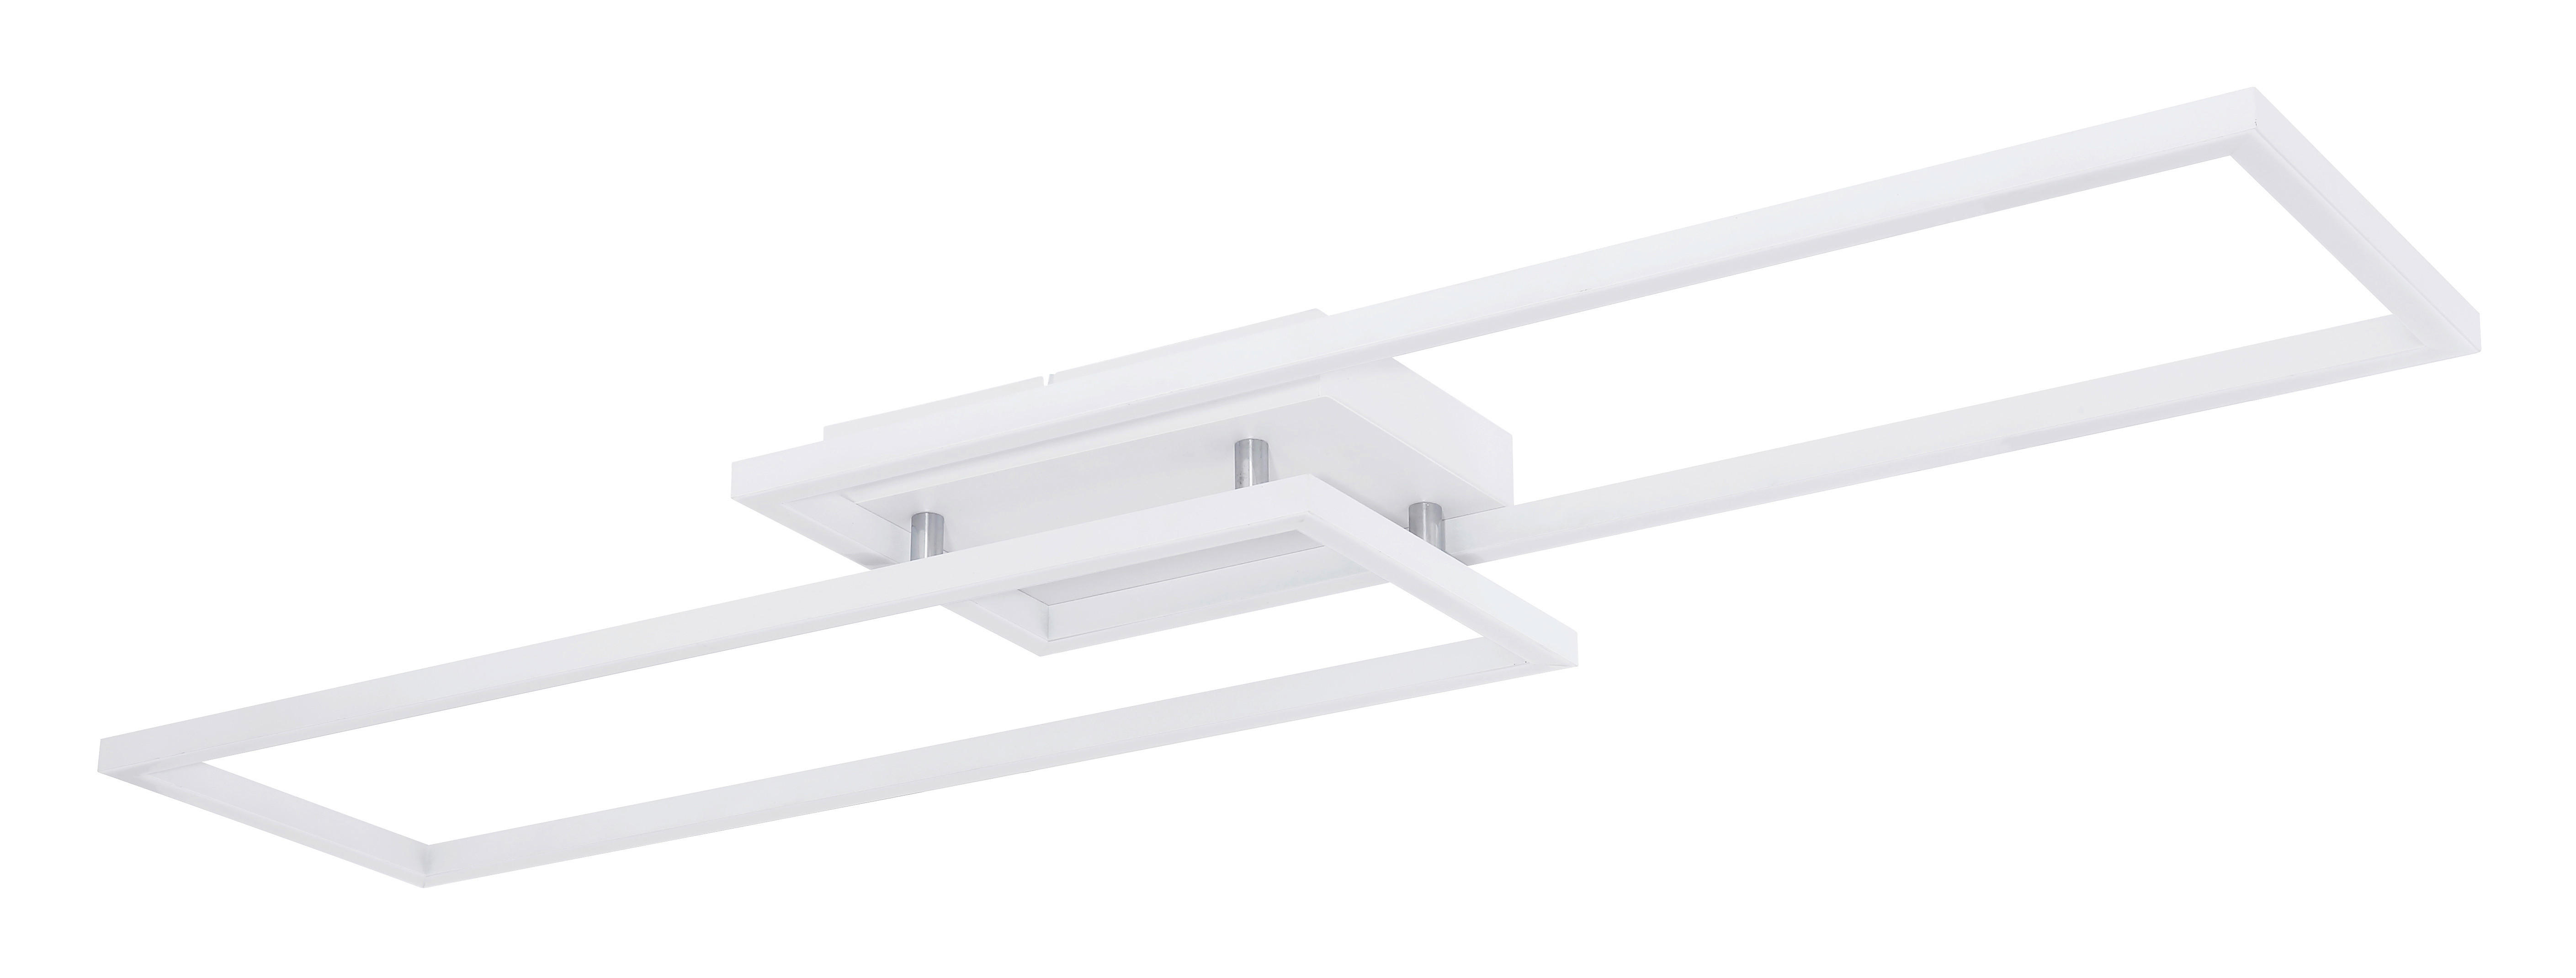 LED-DECKENLEUCHTE 101/29/7,5 cm   - Opal/Weiß, Design, Kunststoff/Metall (101/29/7,5cm) - Globo